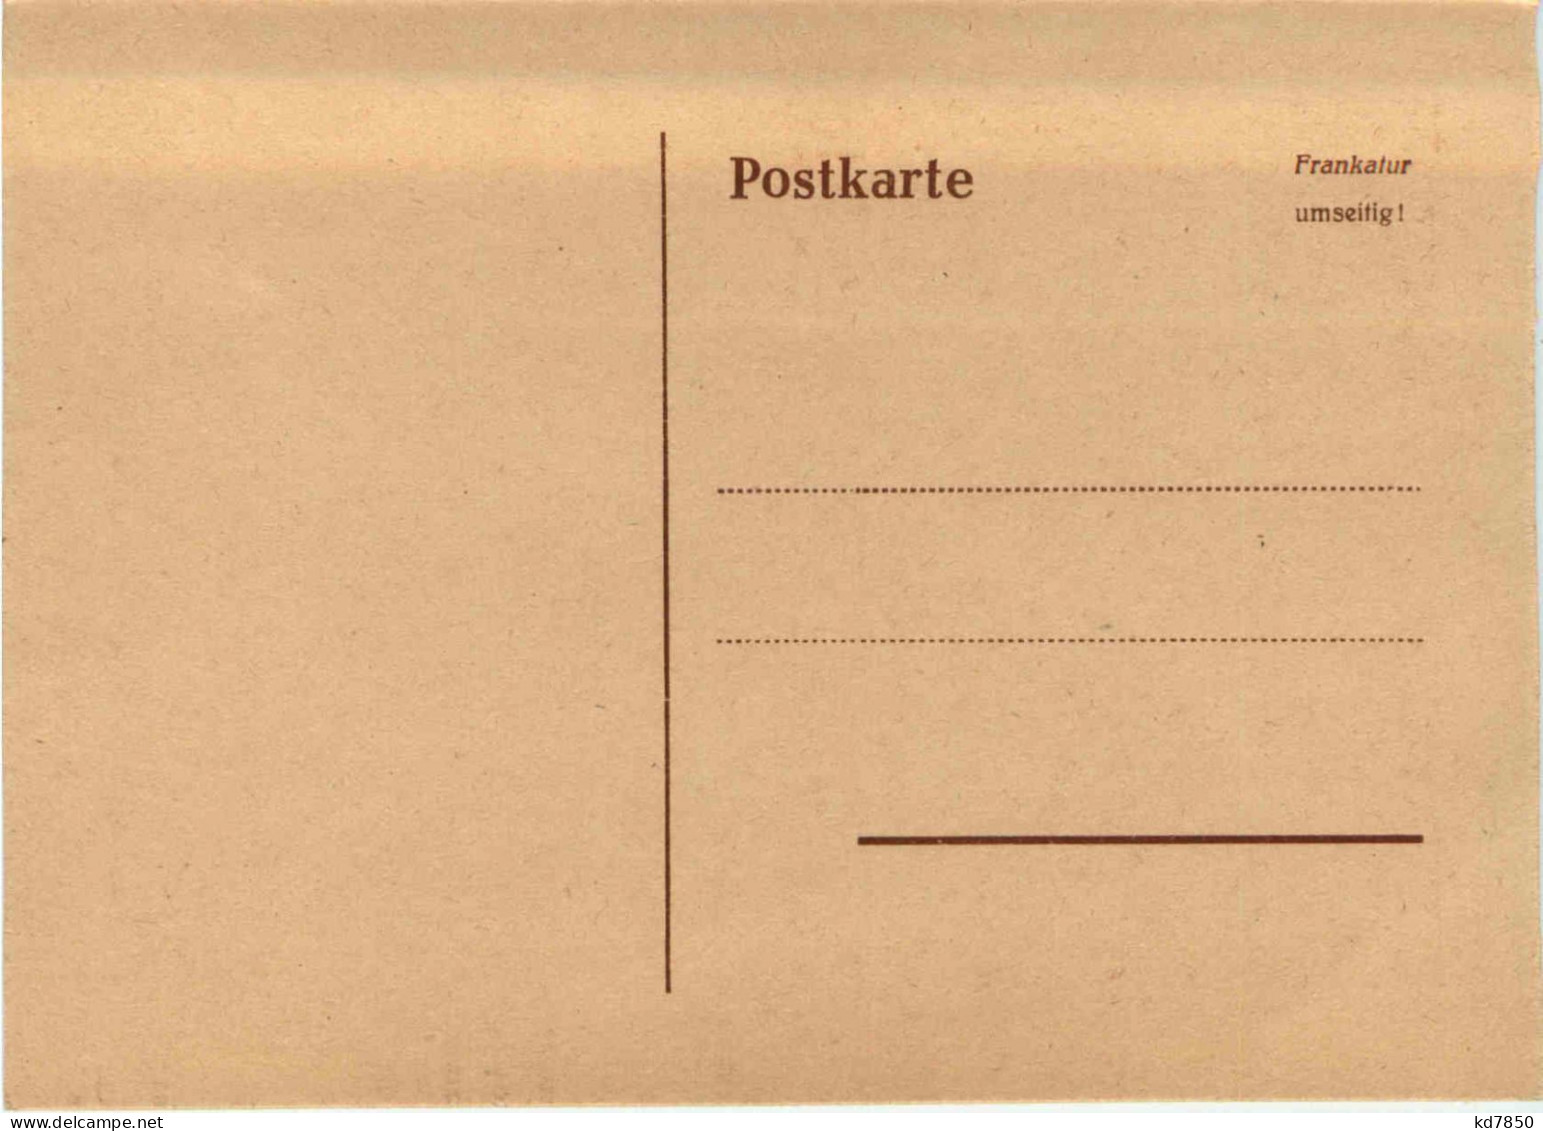 Tag Der Briefmarke 1951 - Saar - Francobolli (rappresentazioni)